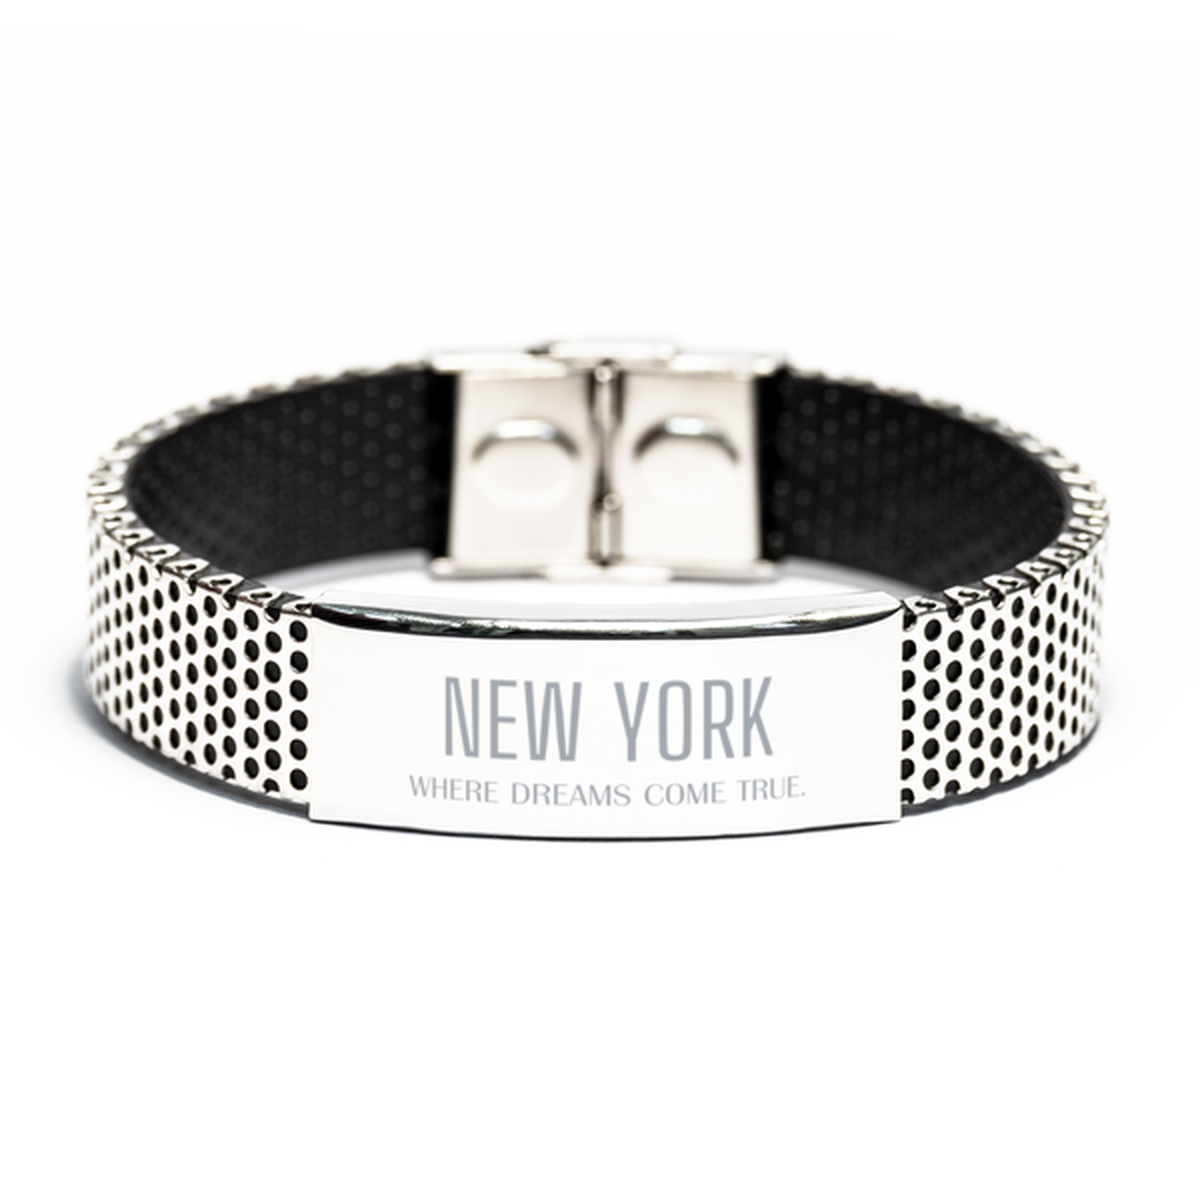 Love New York State Stainless Steel Bracelet, New York Where dreams come true, Birthday Inspirational Gifts For New York Men, Women, Friends